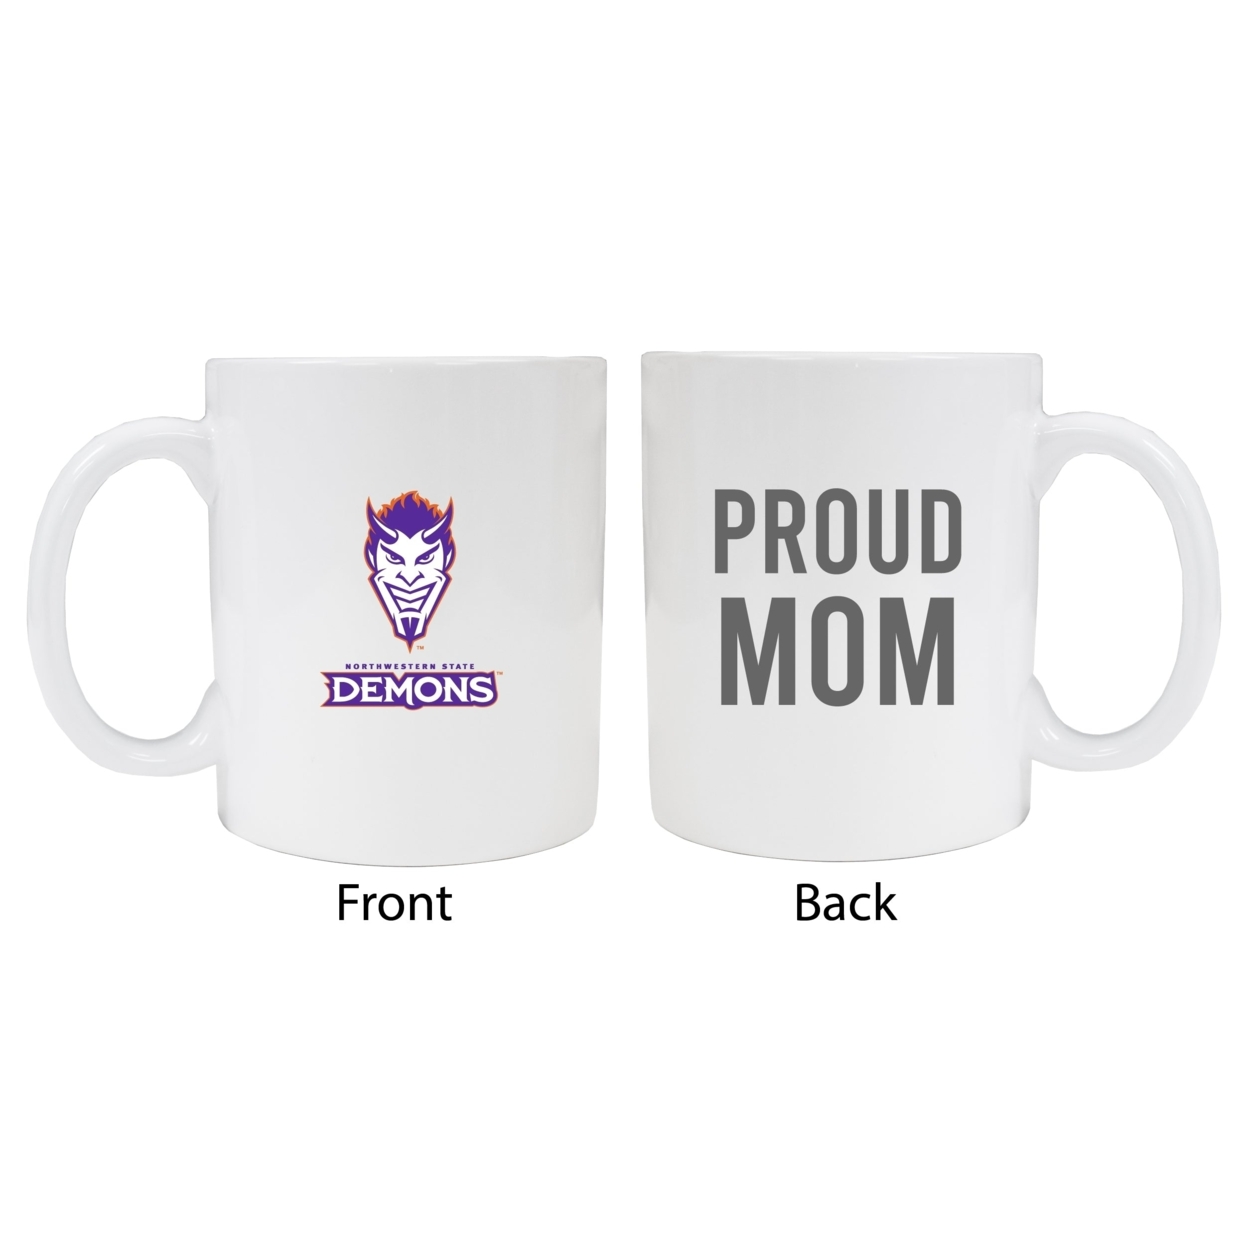 Northwestern State Demons Proud Mom Ceramic Coffee Mug - White